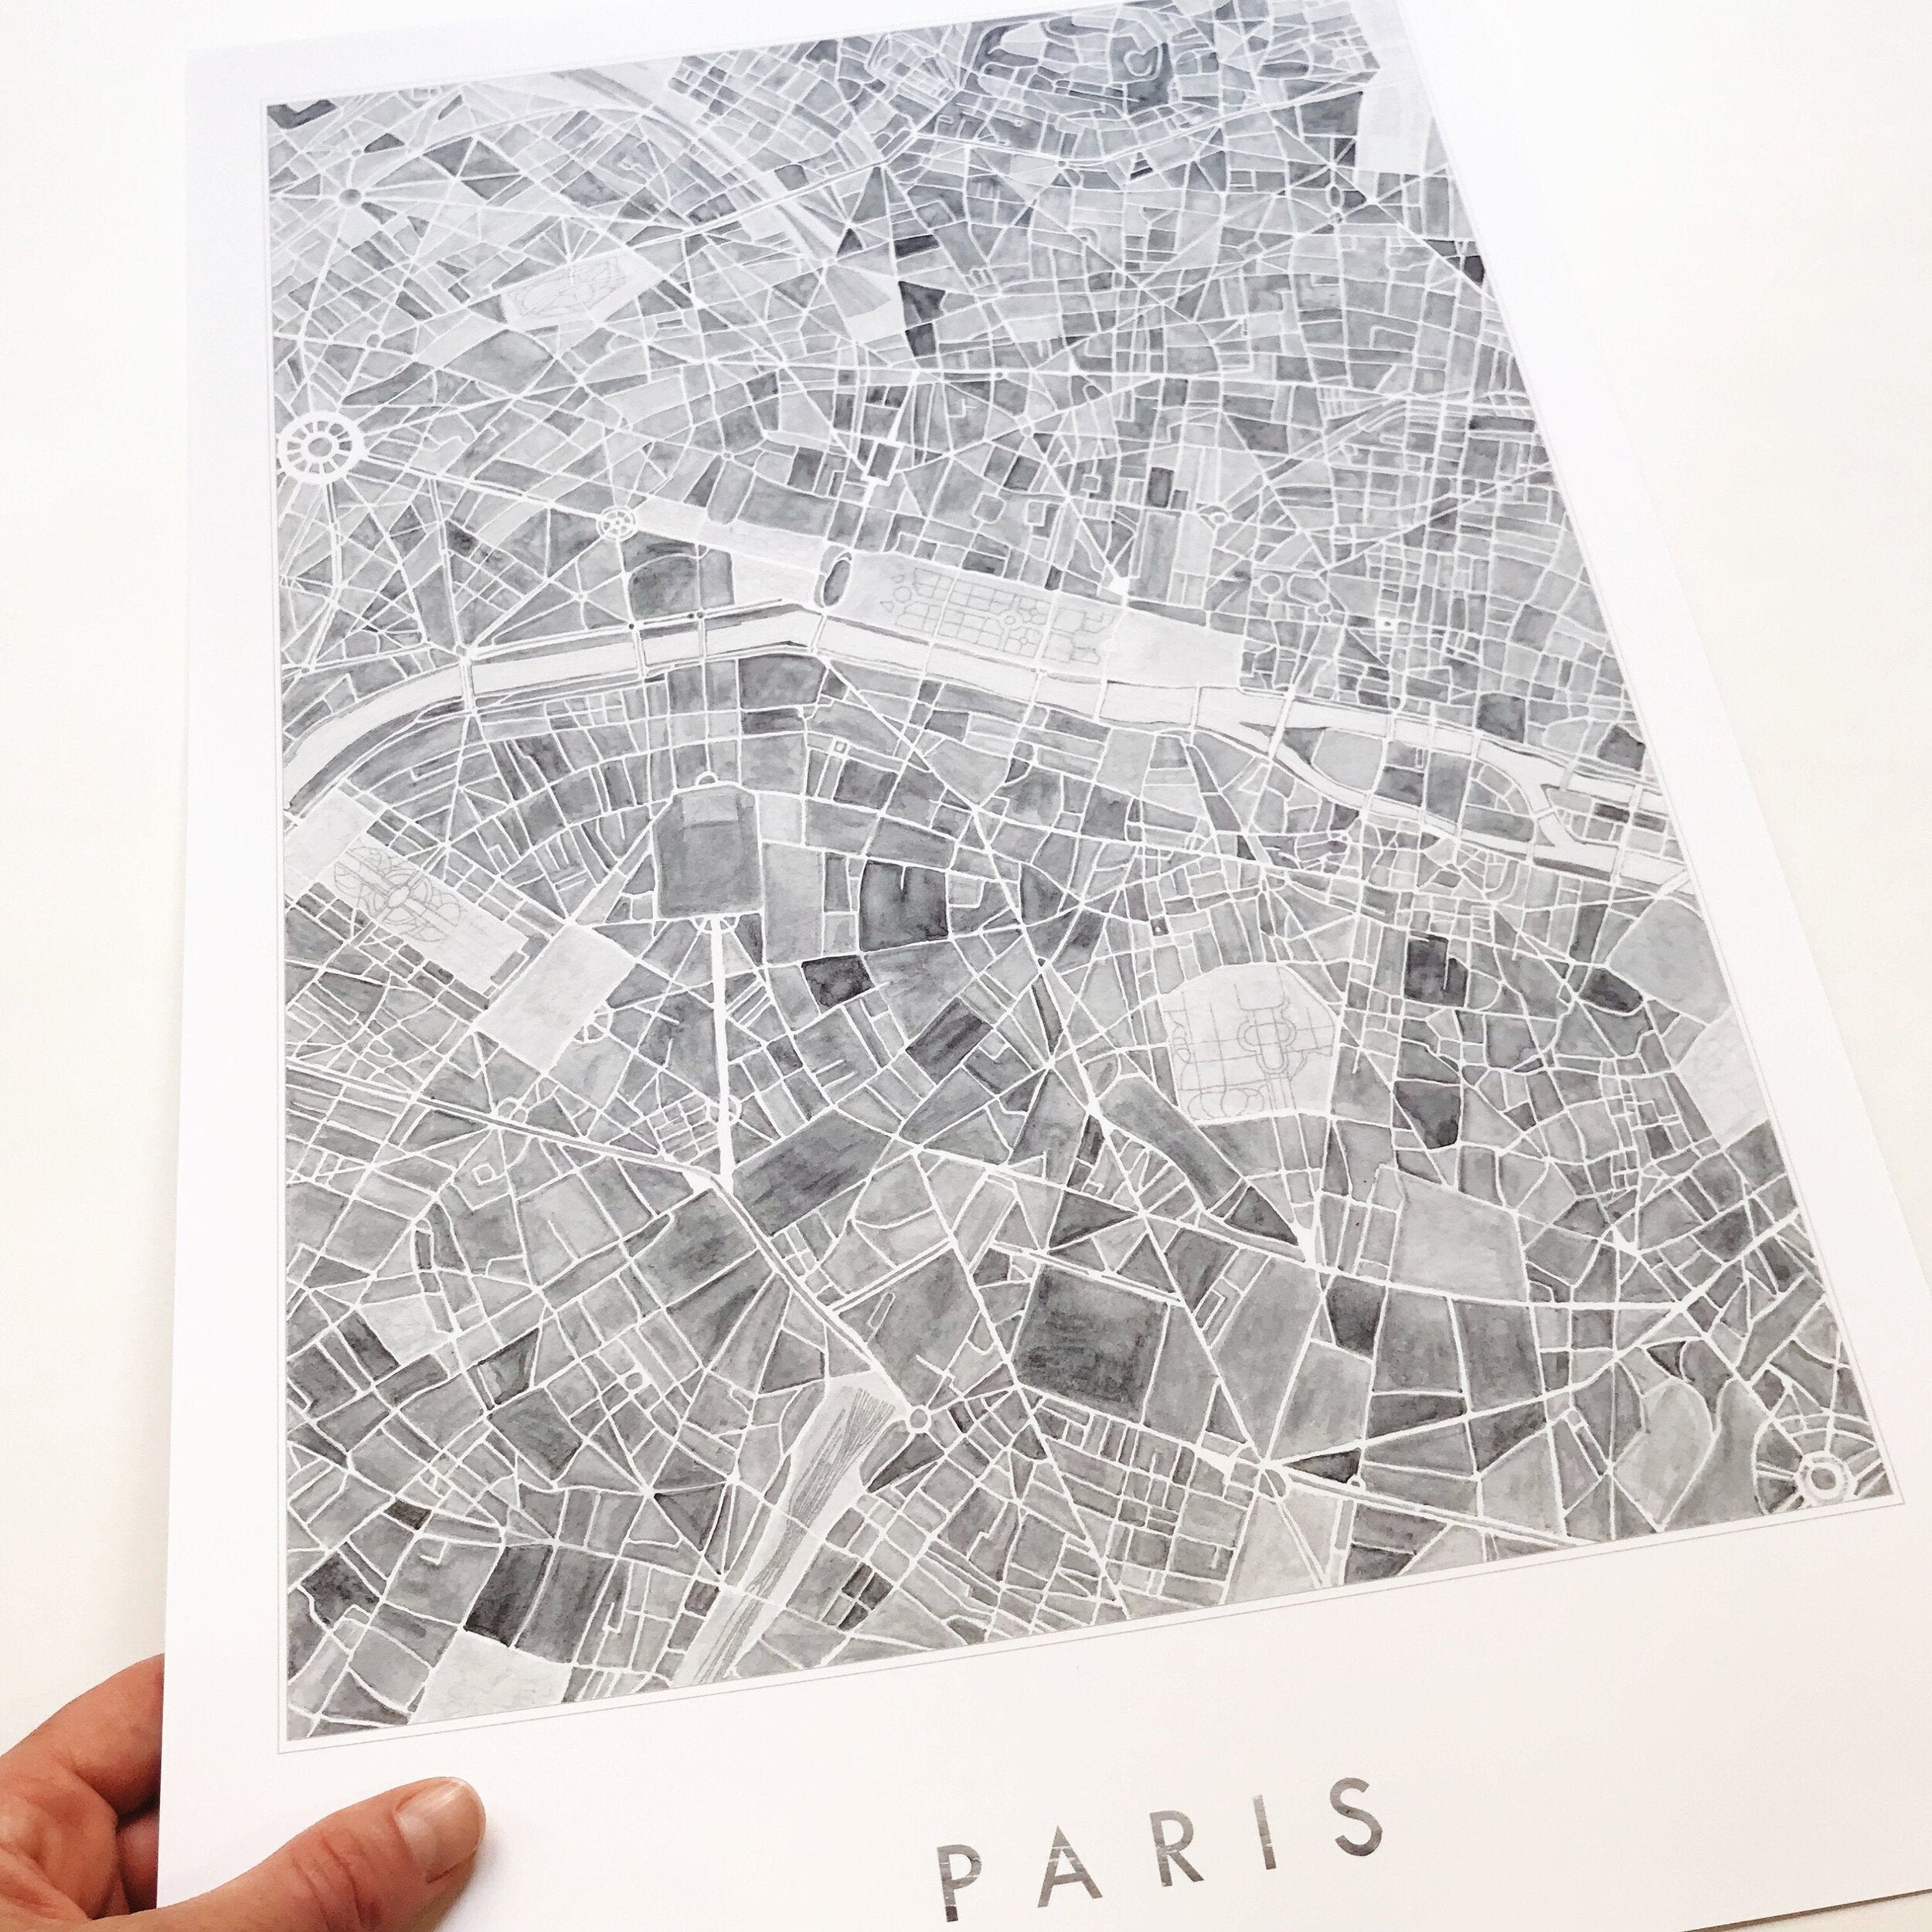 PARIS Watercolor City Blocks Map: PRINT